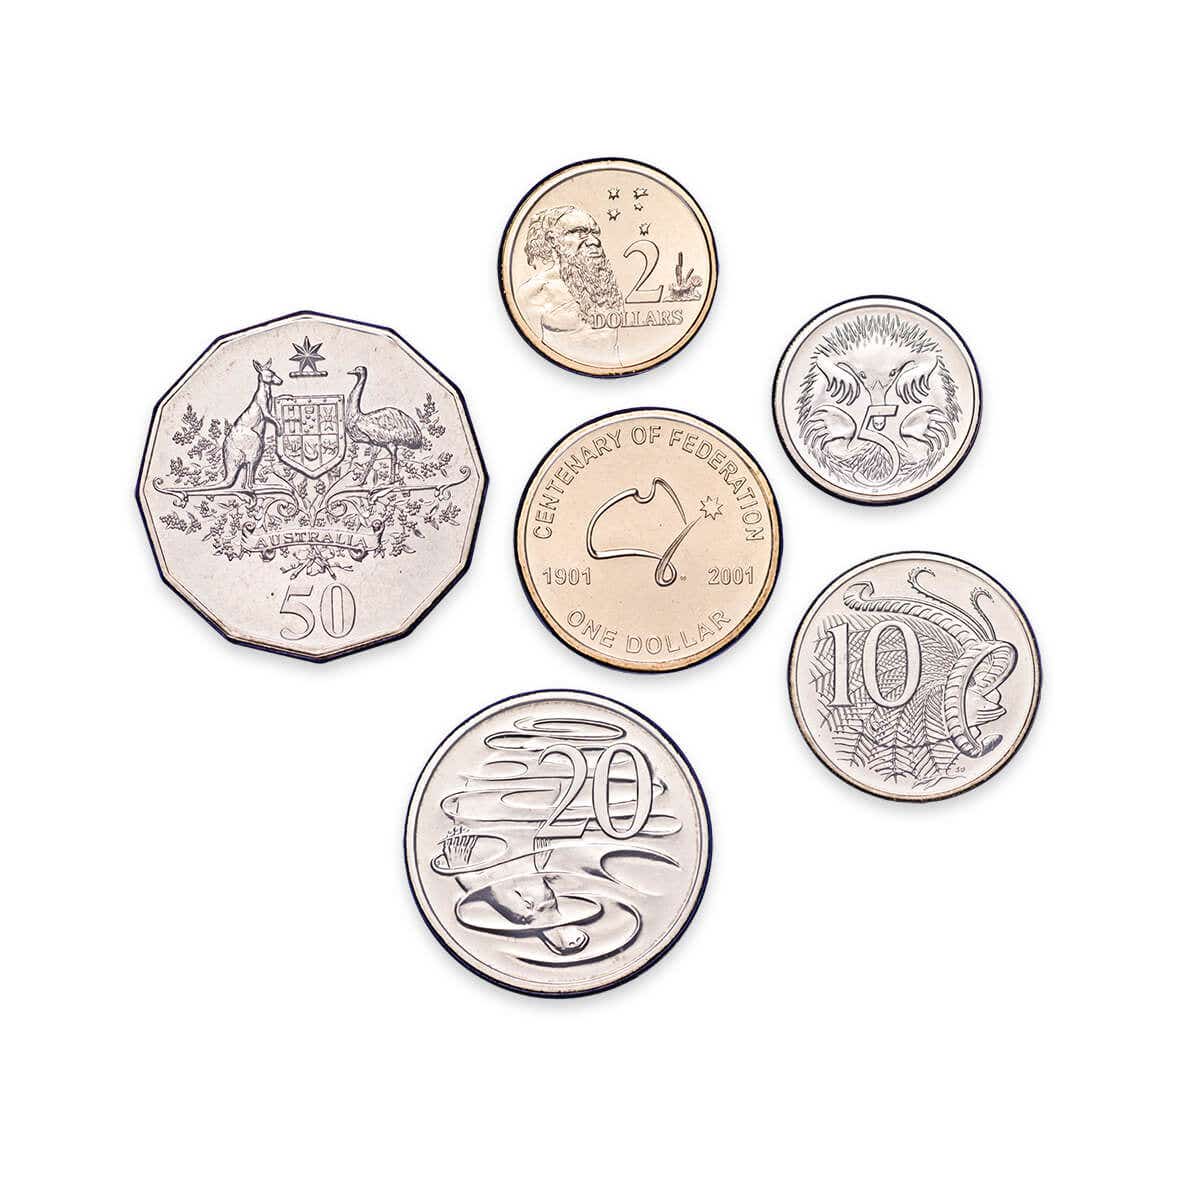 Australia Federation Centenary 2001 6-Coin Mint Set